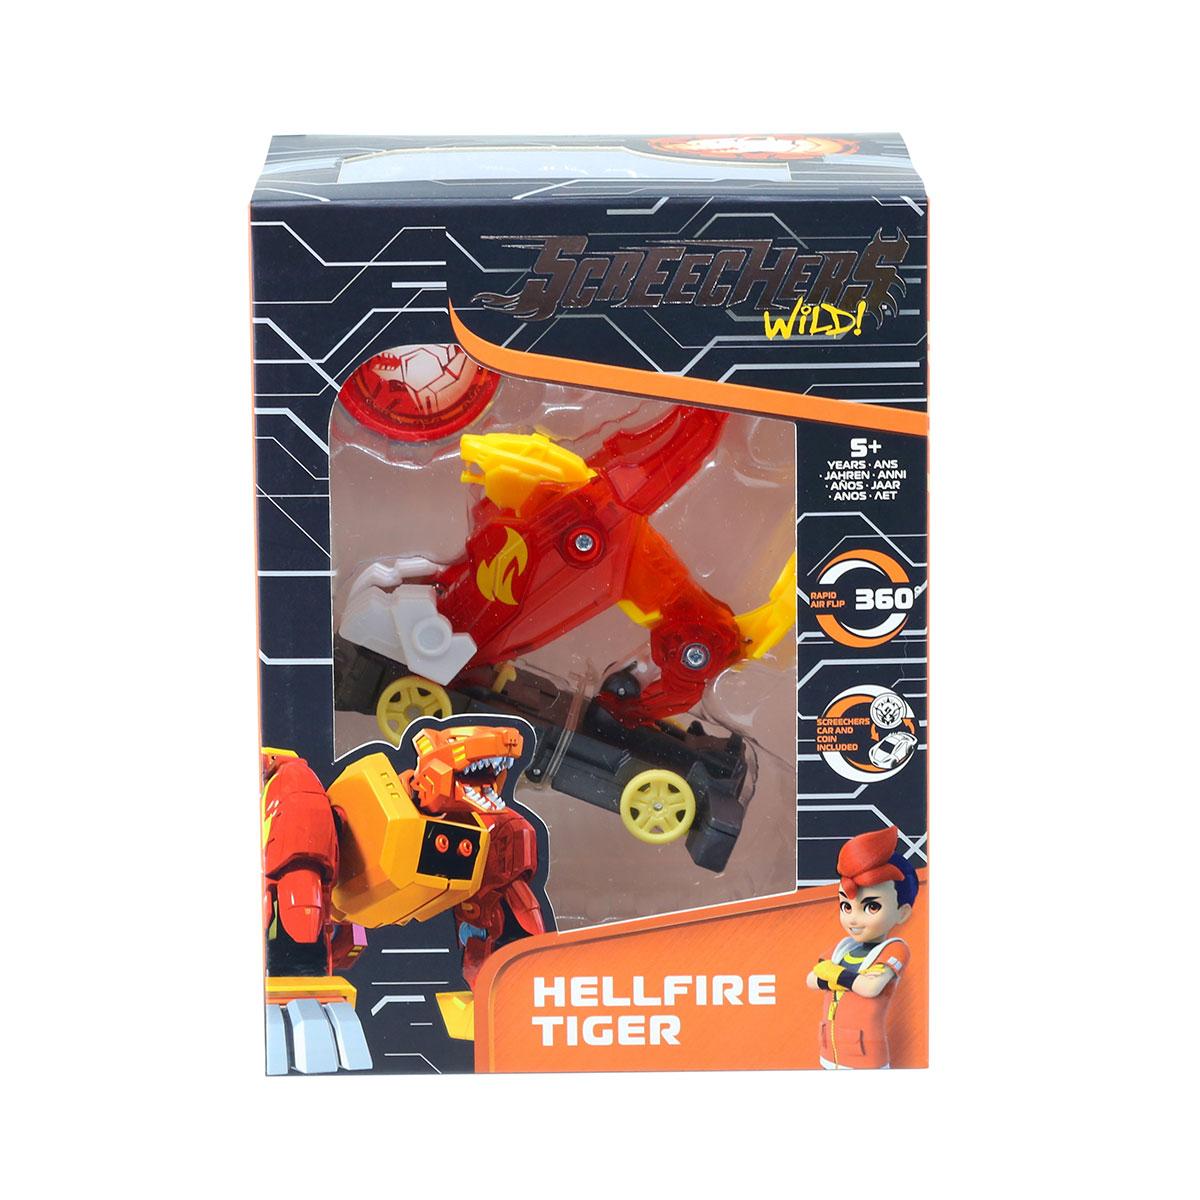 Screechers Wild S4 L1 Хелфаєр Тайгер Машинка-трансформер (Дикі Скрічери "Хелфаєр Тайгер",Hellfire Tiger)